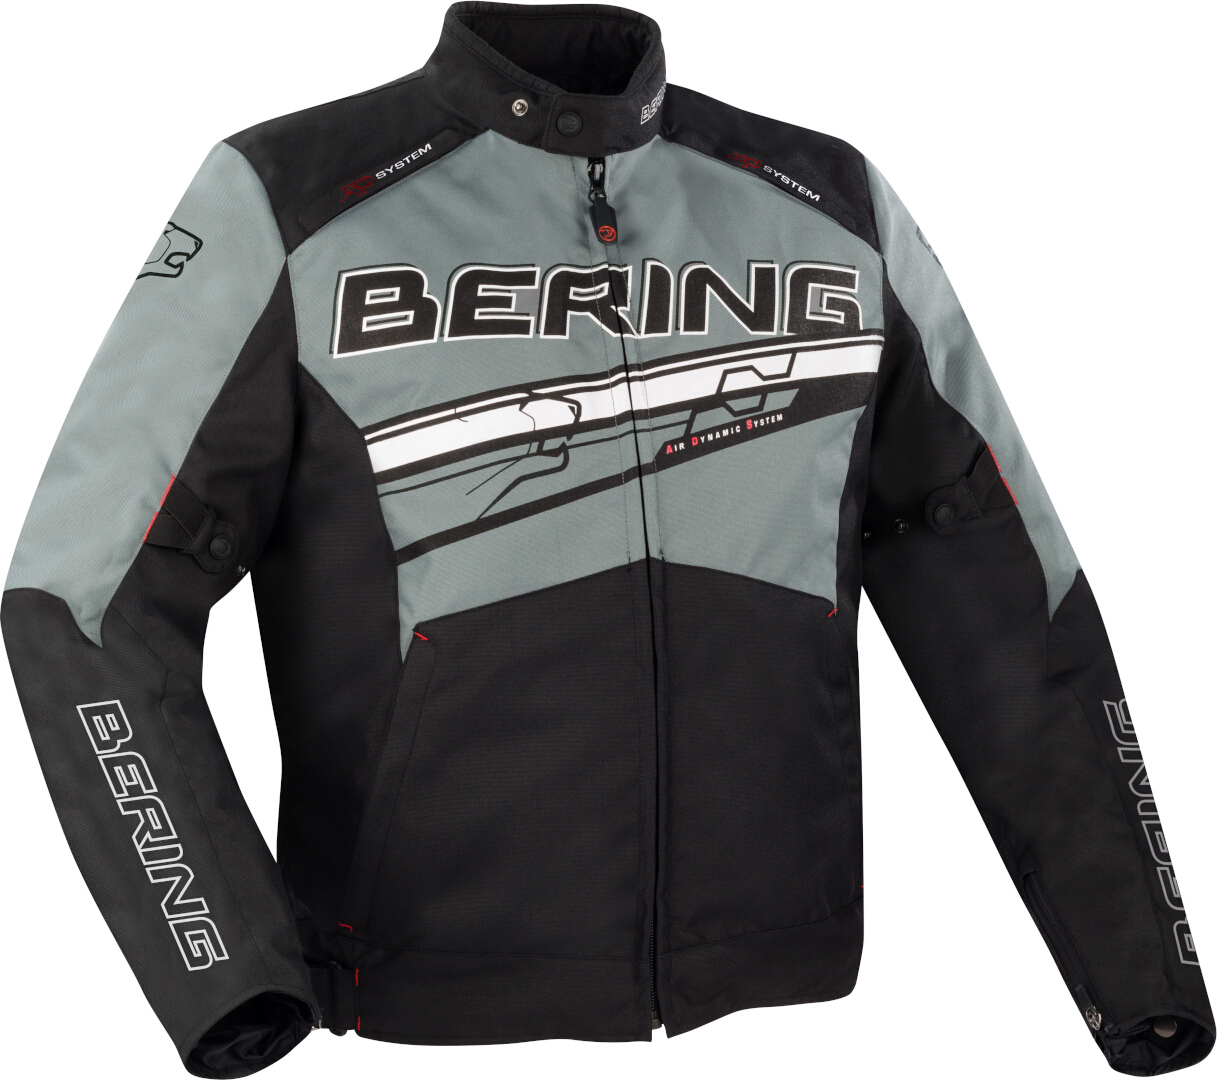 Bering Bario Motorrad Textiljacke, schwarz-grau-weiss, Größe S